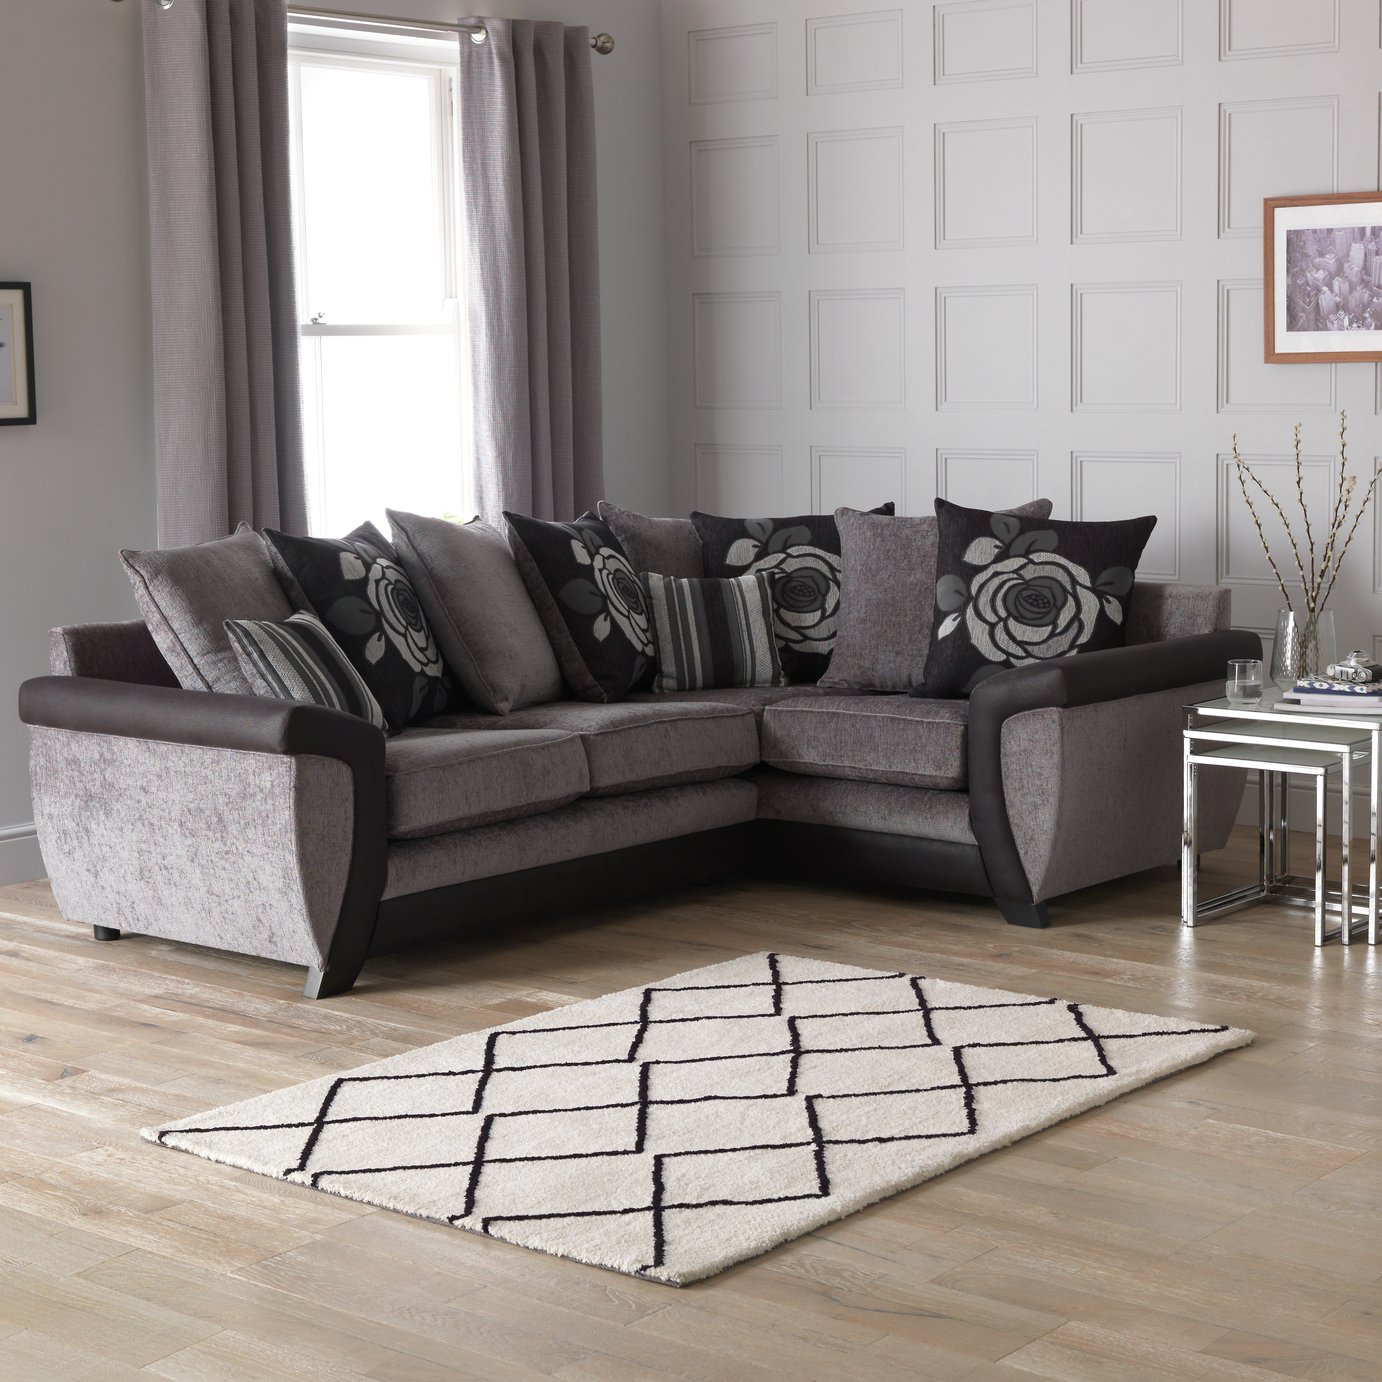 Argos Home Illusion Right Corner Fabric Sofa Review